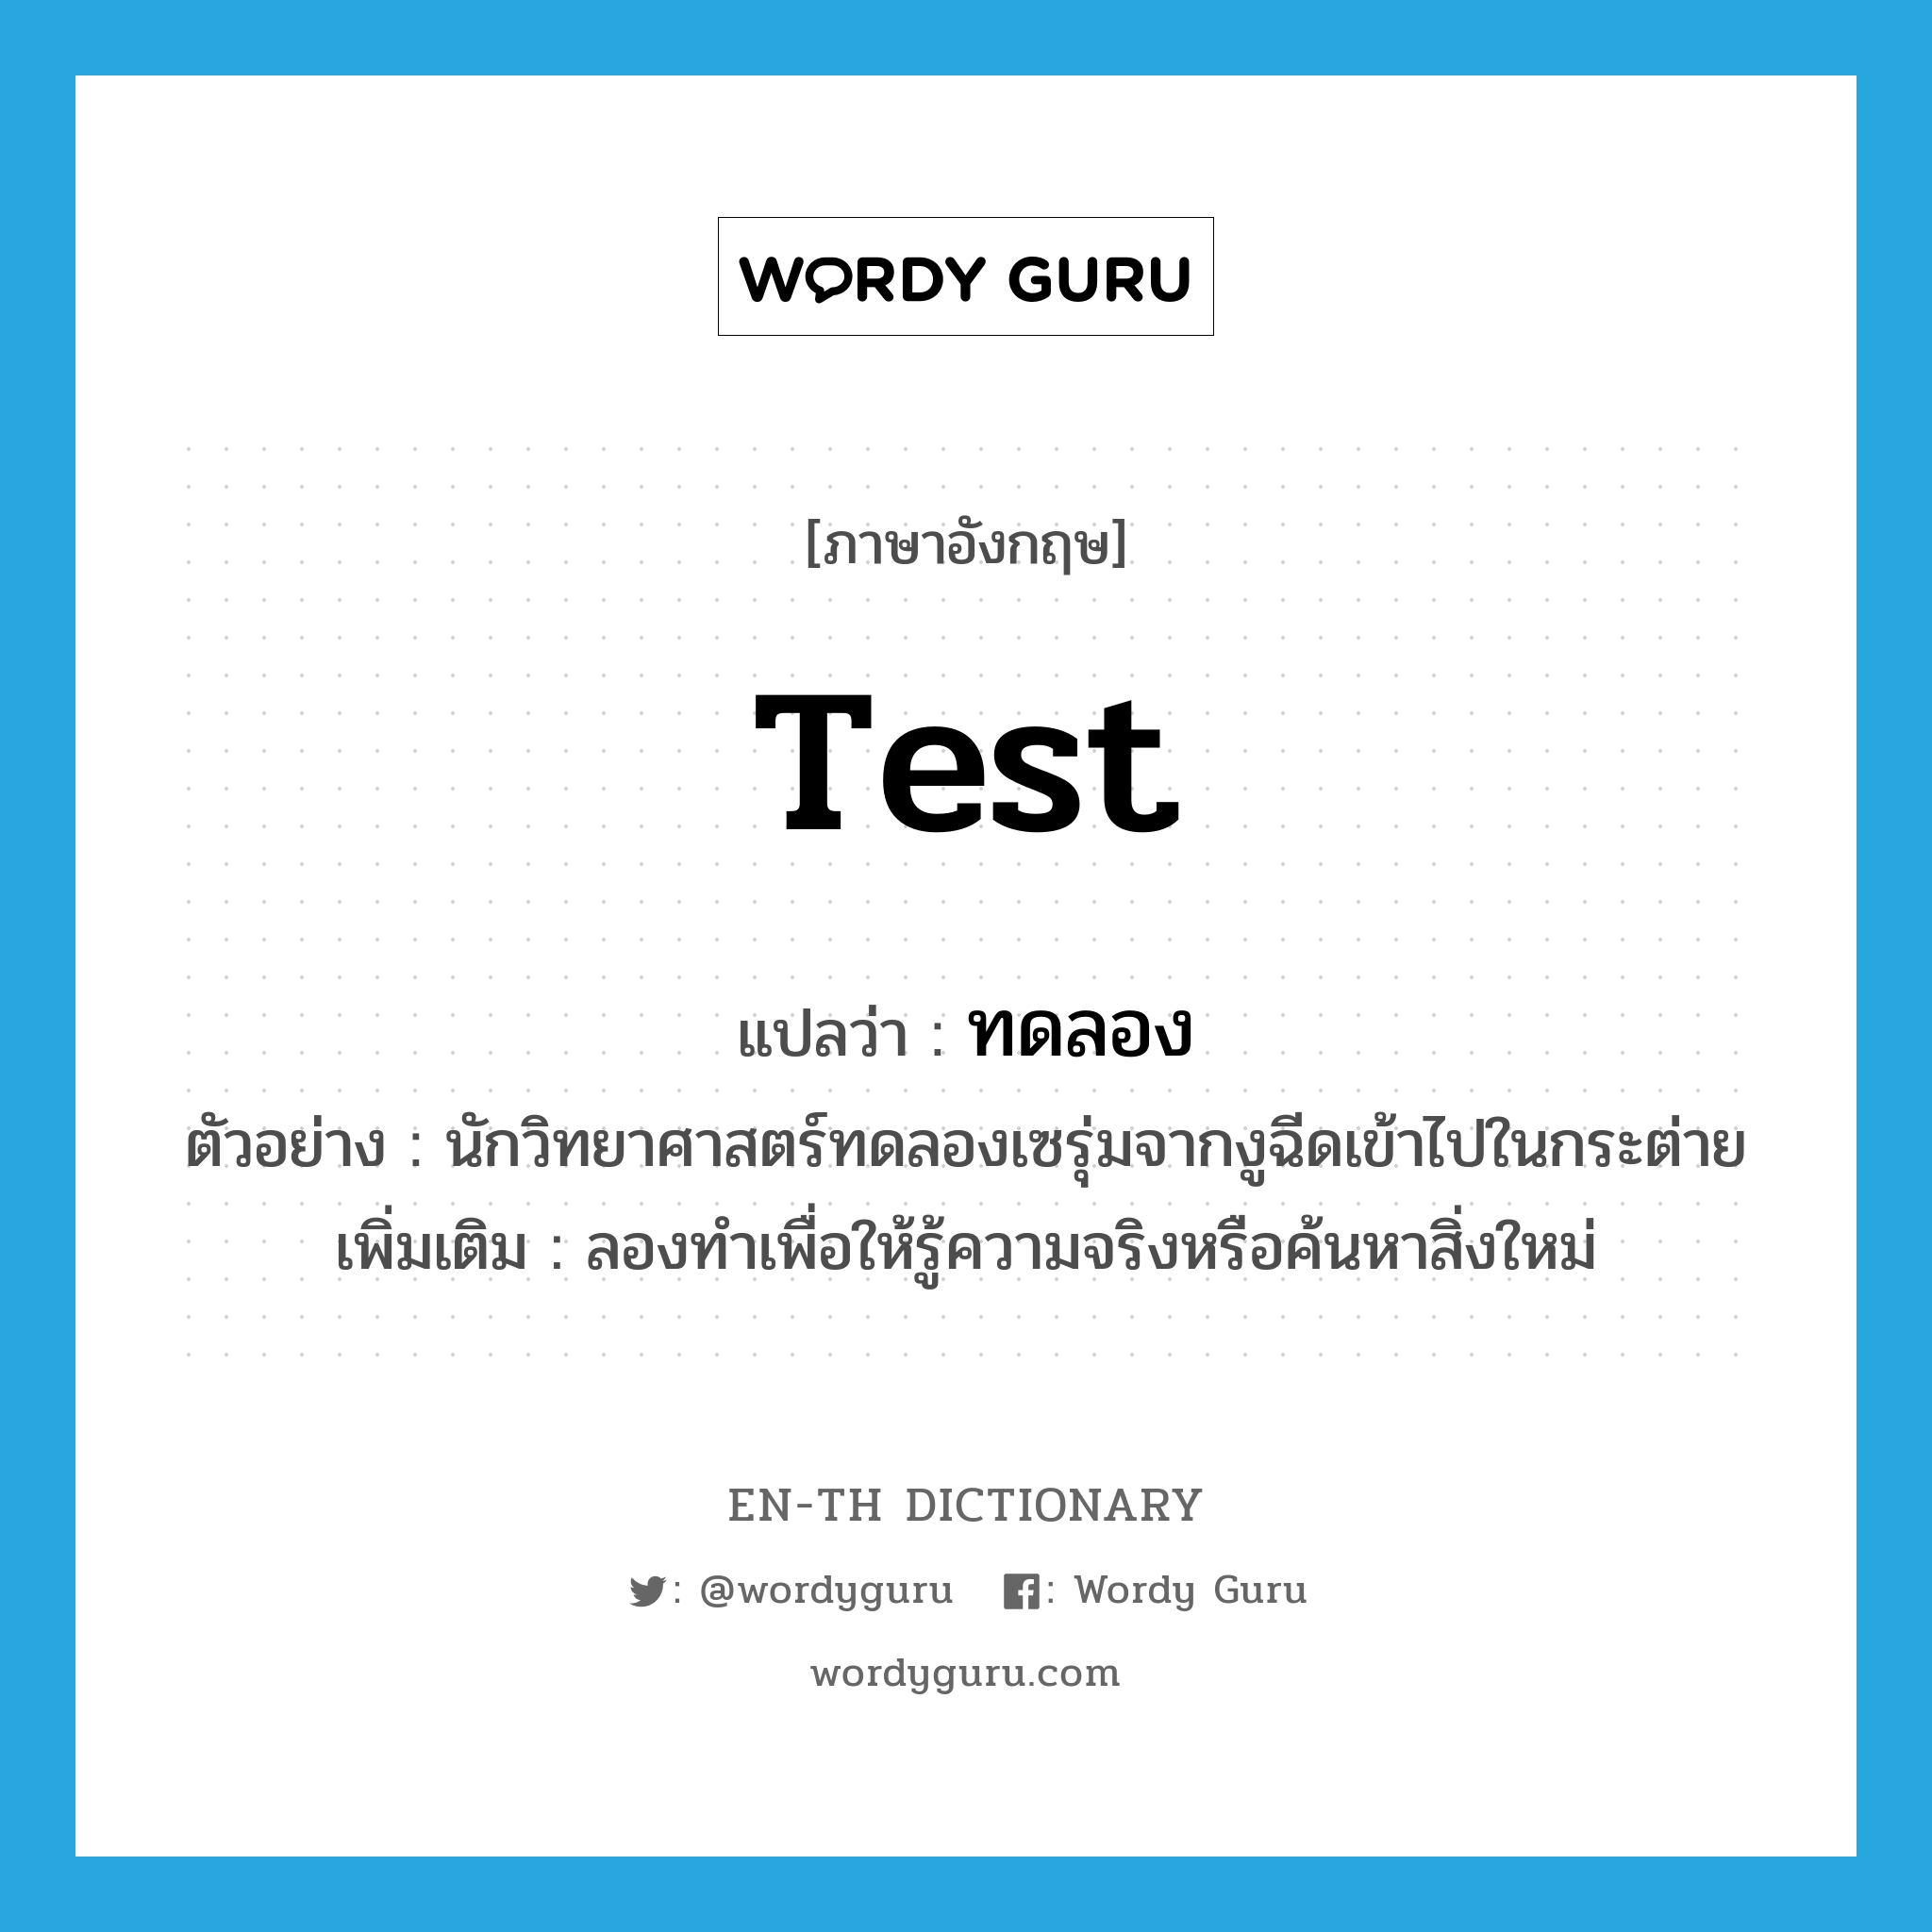 test แปลว่า?, คำศัพท์ภาษาอังกฤษ test แปลว่า ทดลอง ประเภท V ตัวอย่าง นักวิทยาศาสตร์ทดลองเซรุ่มจากงูฉีดเข้าไปในกระต่าย เพิ่มเติม ลองทำเพื่อให้รู้ความจริงหรือค้นหาสิ่งใหม่ หมวด V